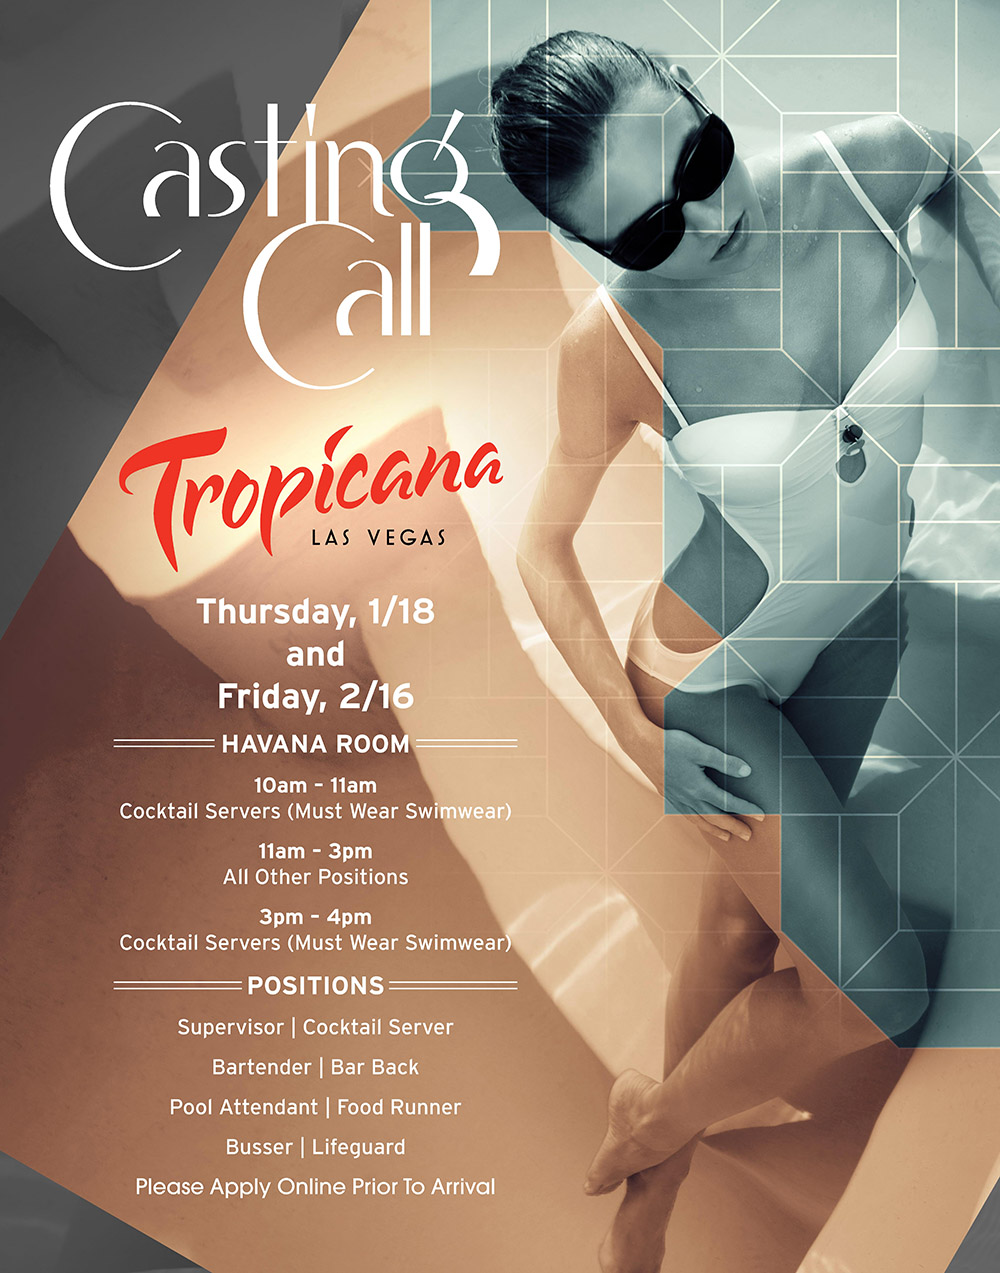 Topicana Pool 2018 Casting Call